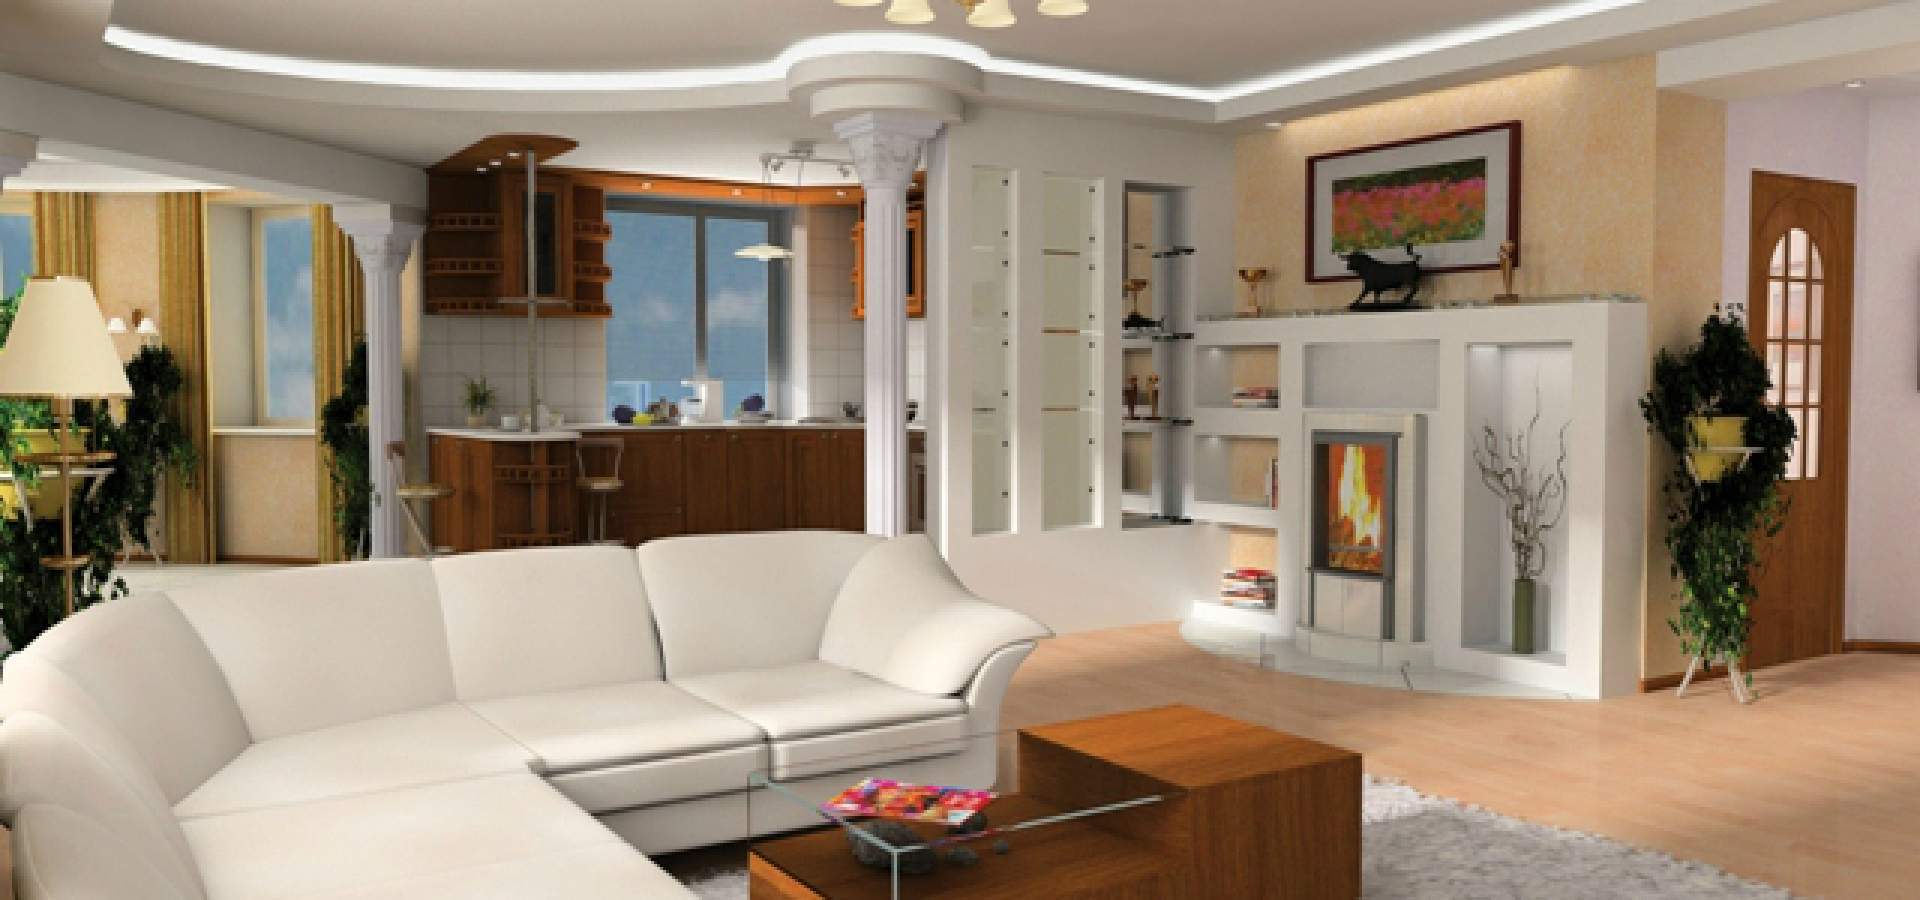 Konia Luxury Houses Interior Design